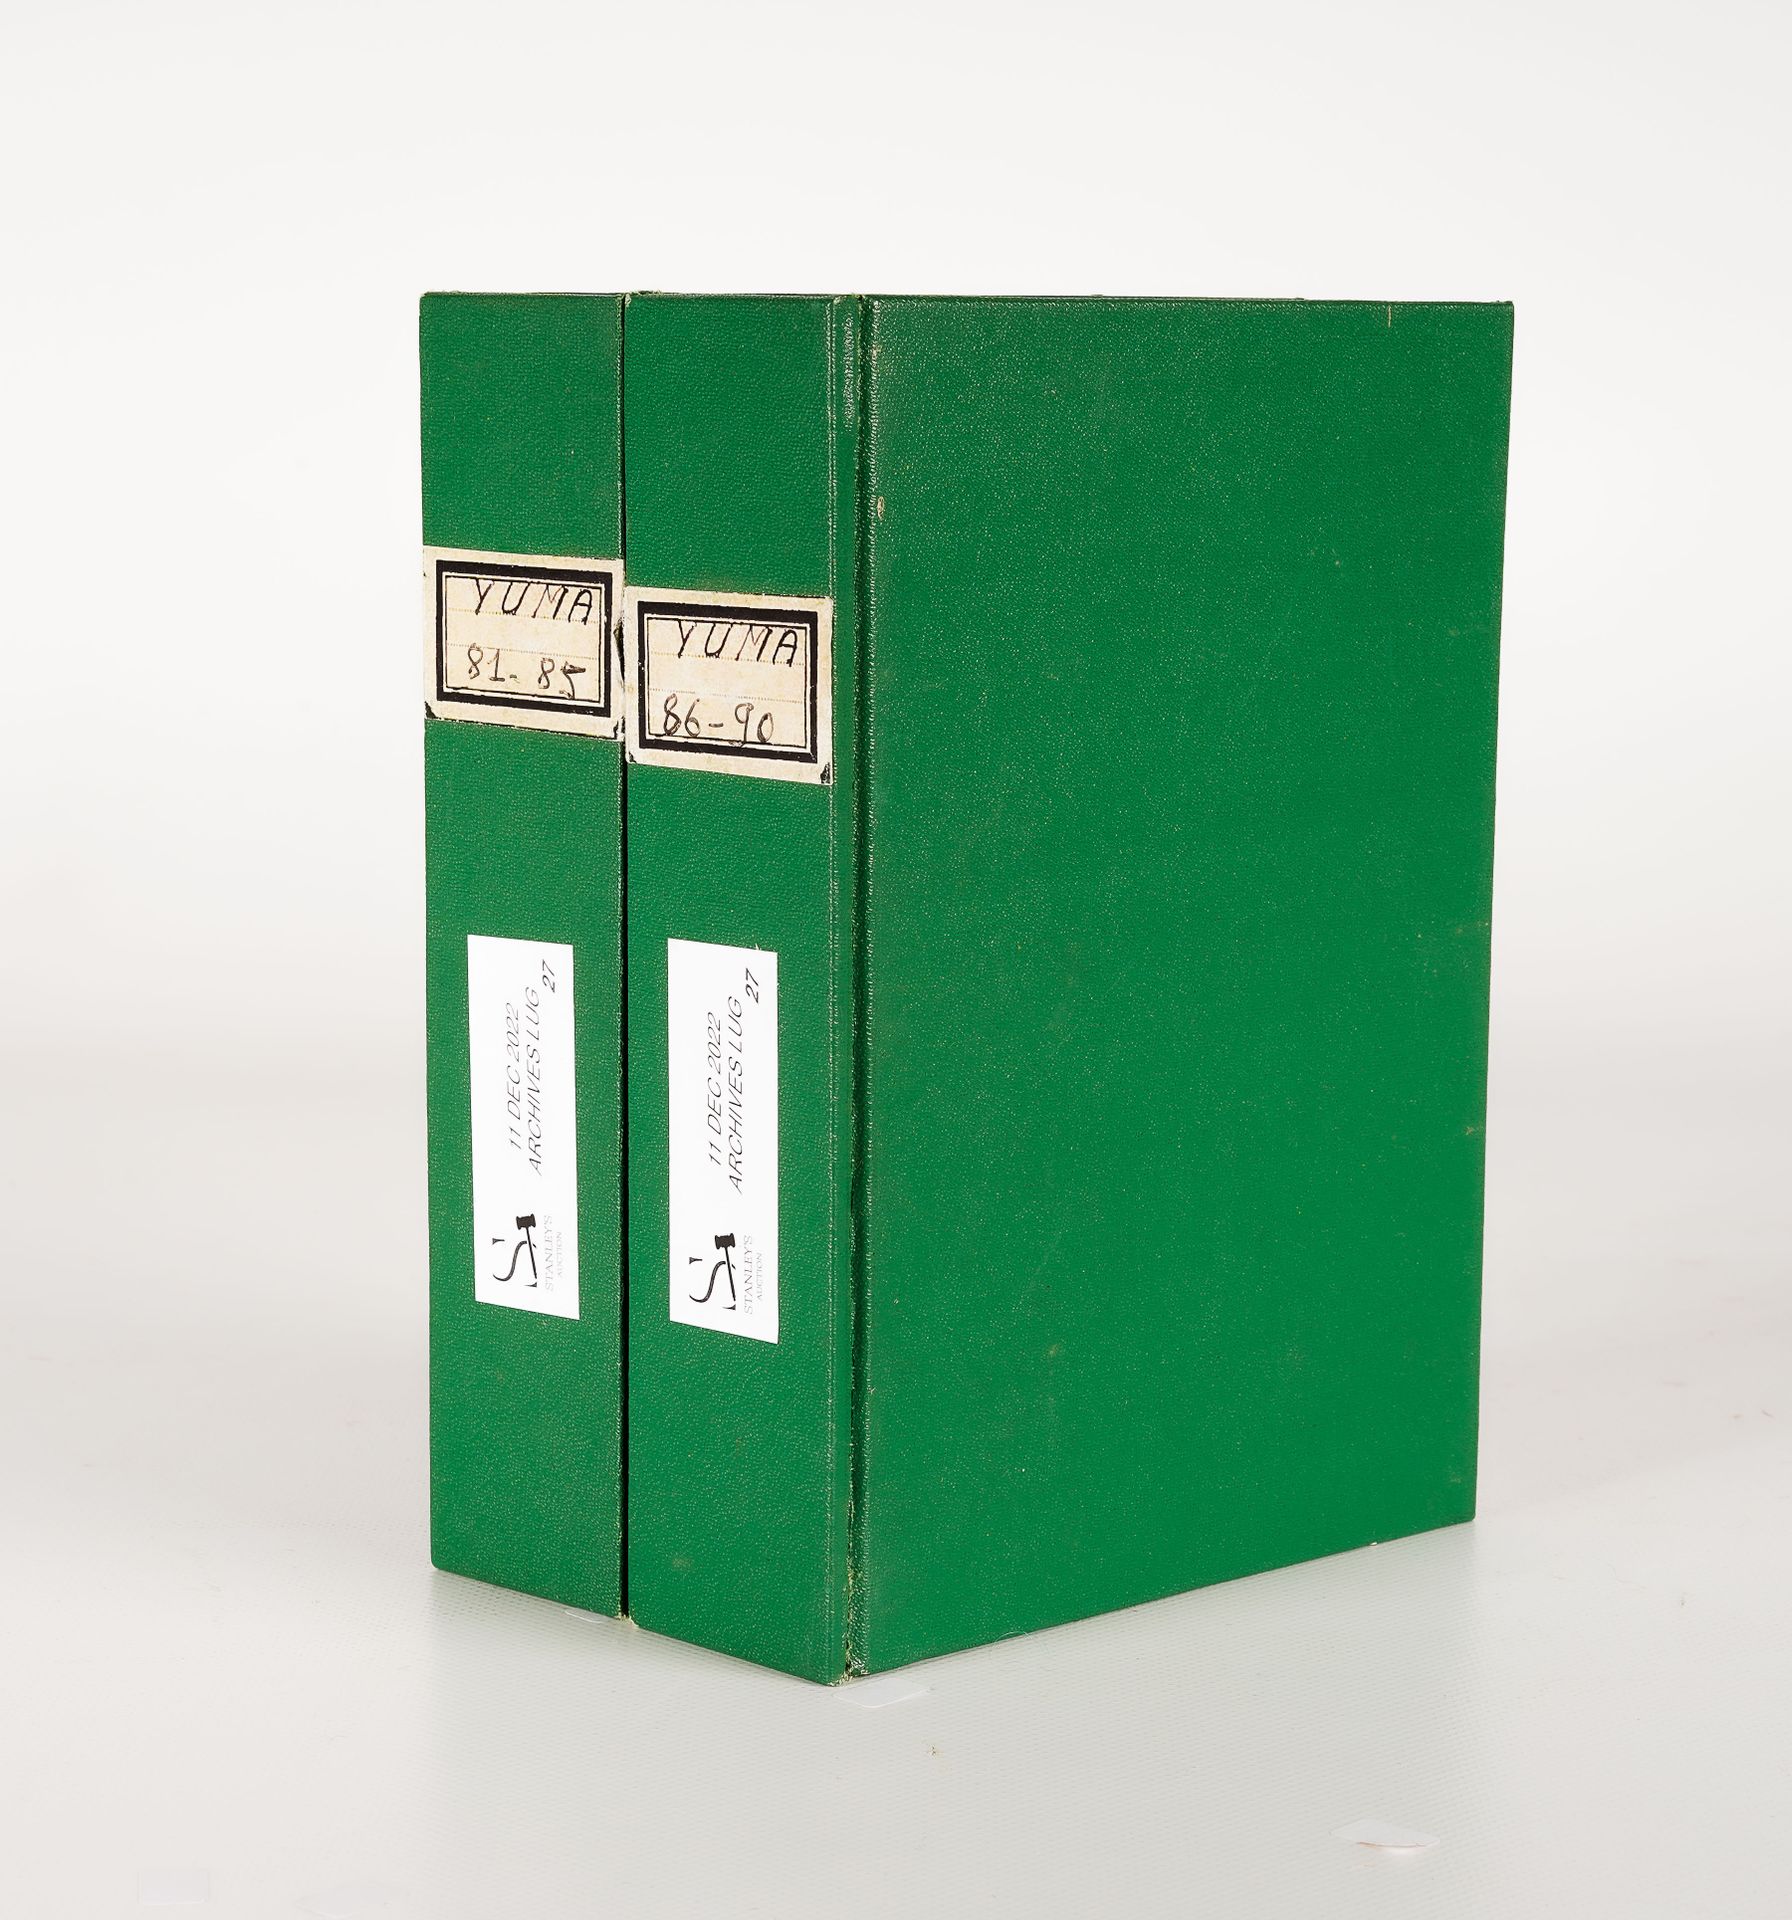 LUG SEMIC, ARCHIVES COMICS 两个LUG活页夹，上面写着YUMA第81至90号，绿色布，尺寸为H 18 x 13厘米，其中一个活页夹脱落&hellip;